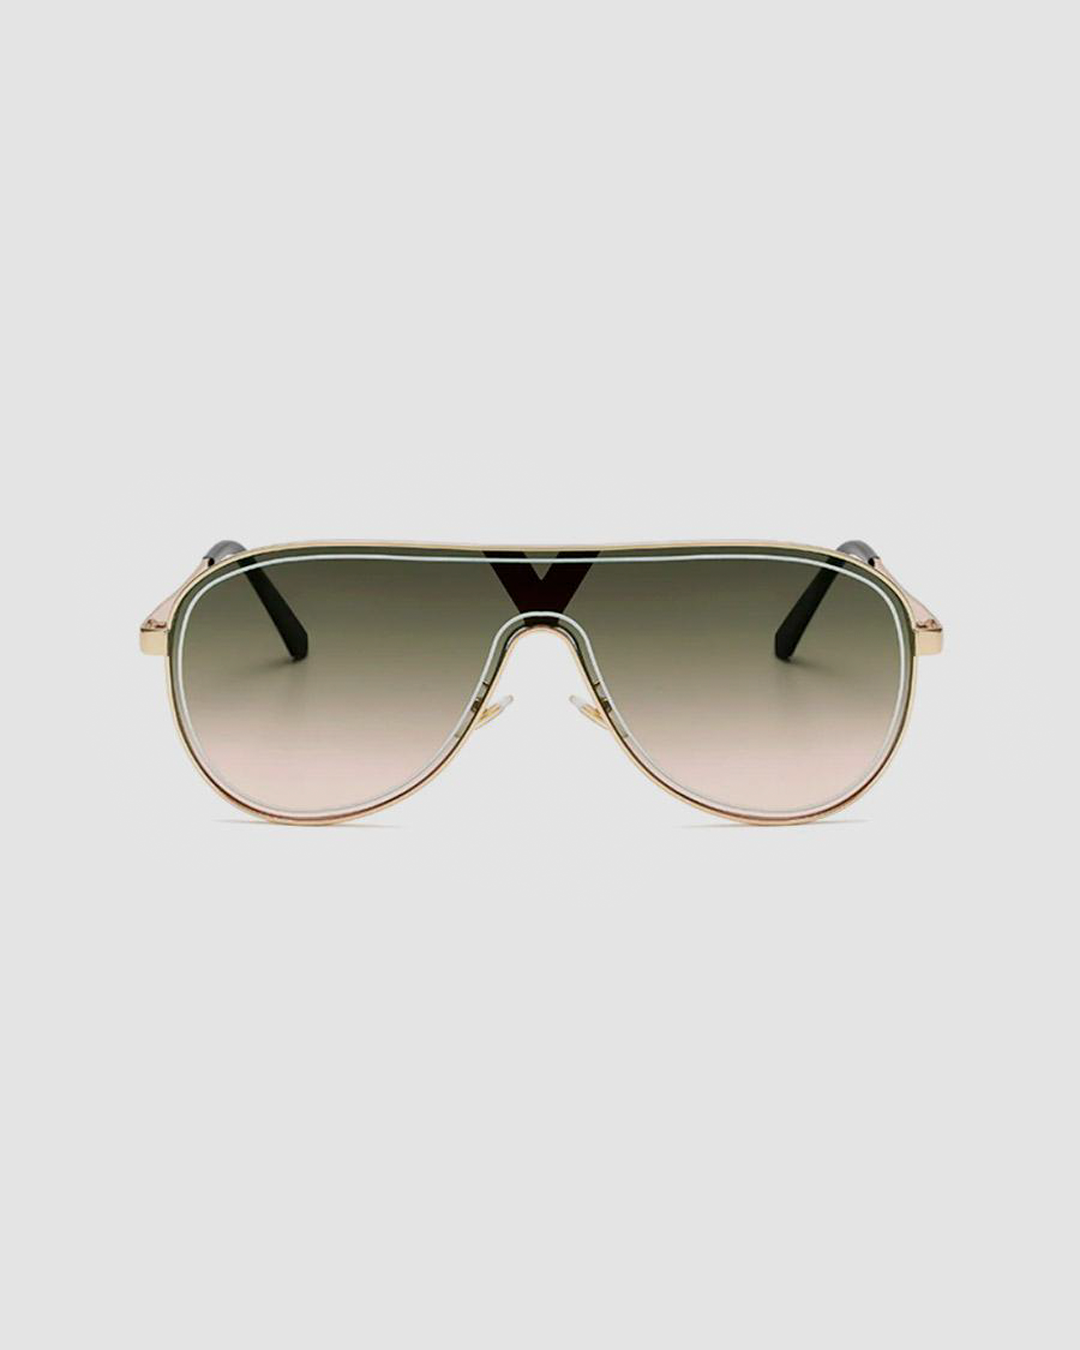 Moxmalox Sunglasses